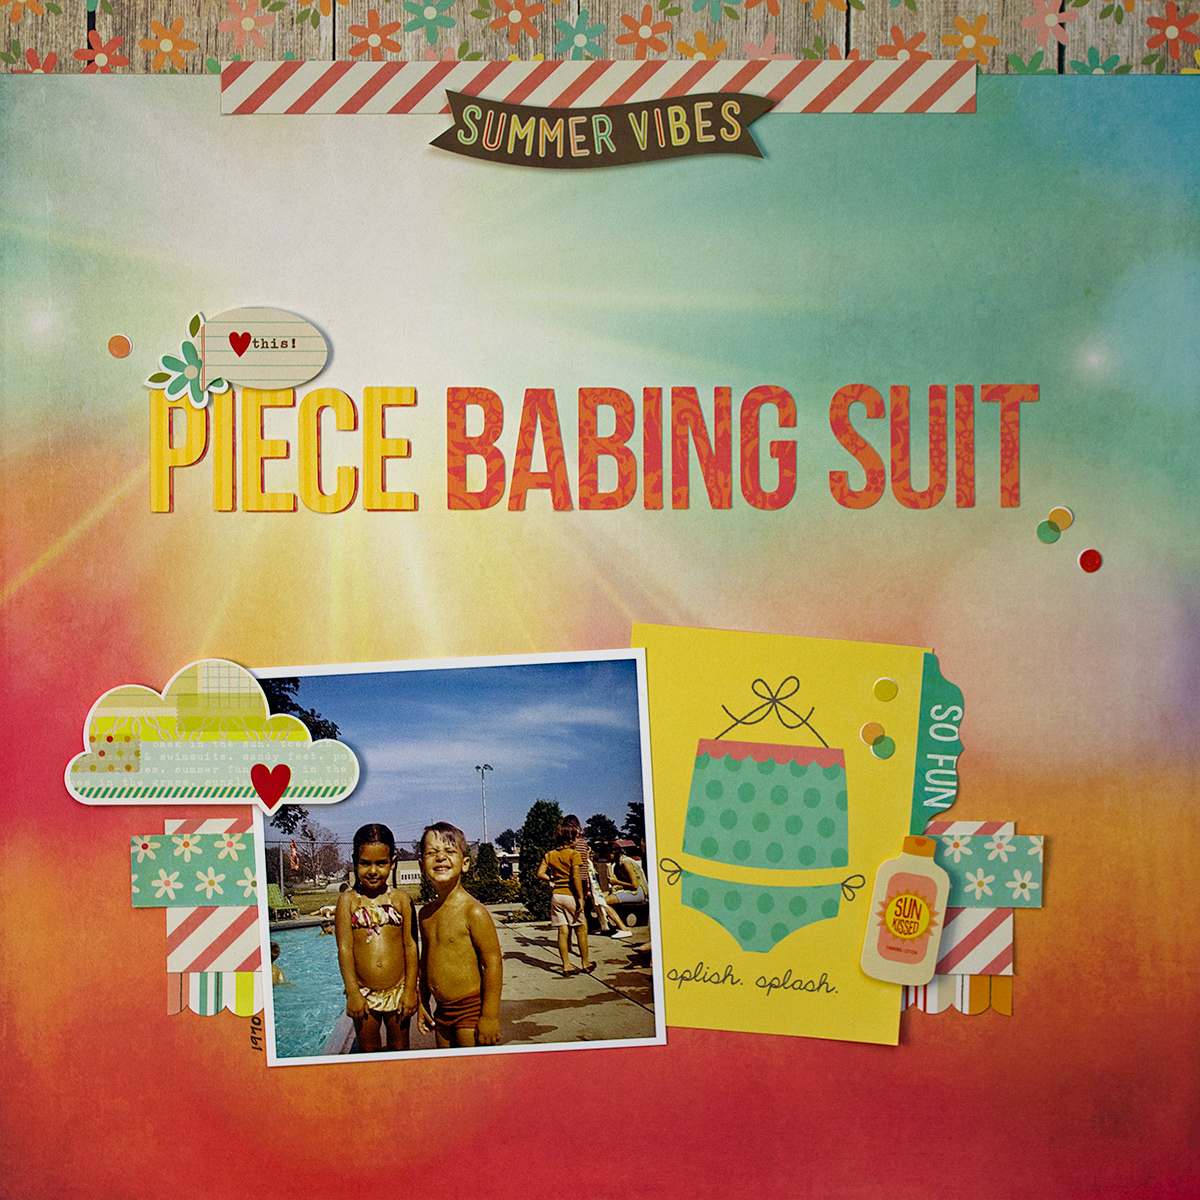 Piece babing suit